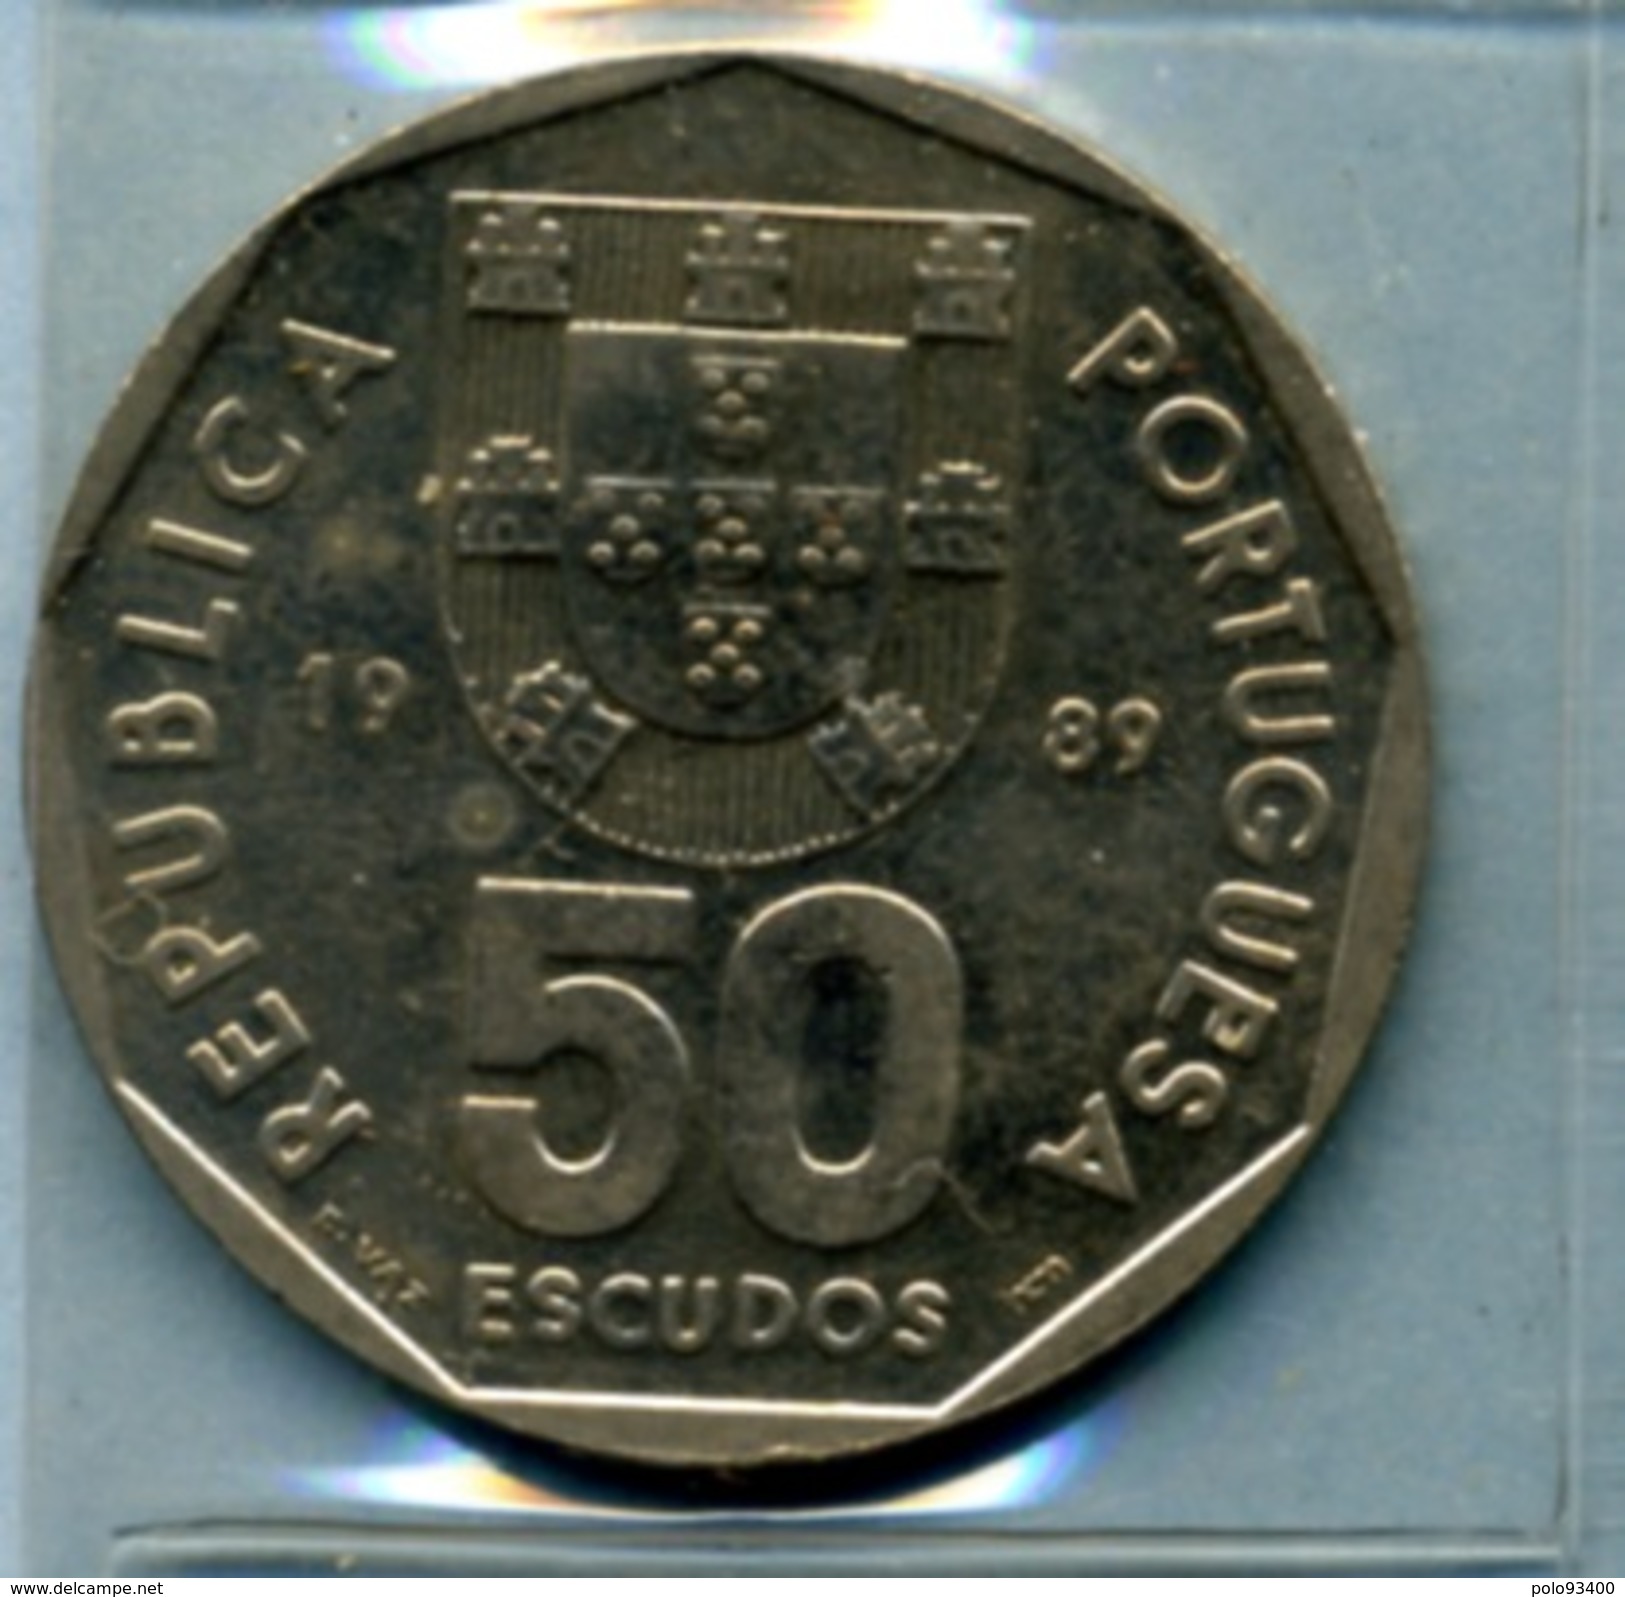 1989  50  ESCUDOS - Portugal